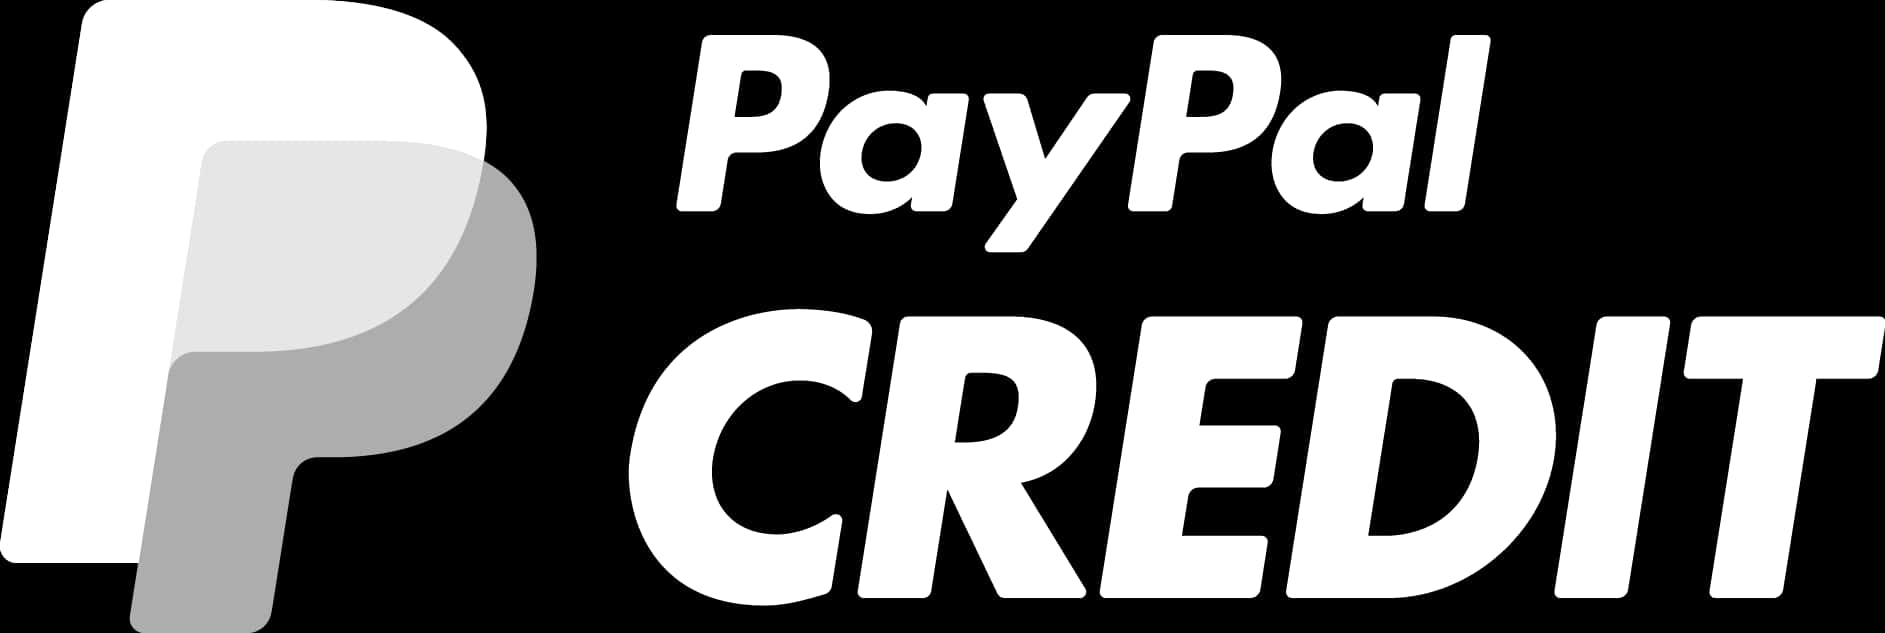 Pay Pal Credit Logo Blackand White PNG image